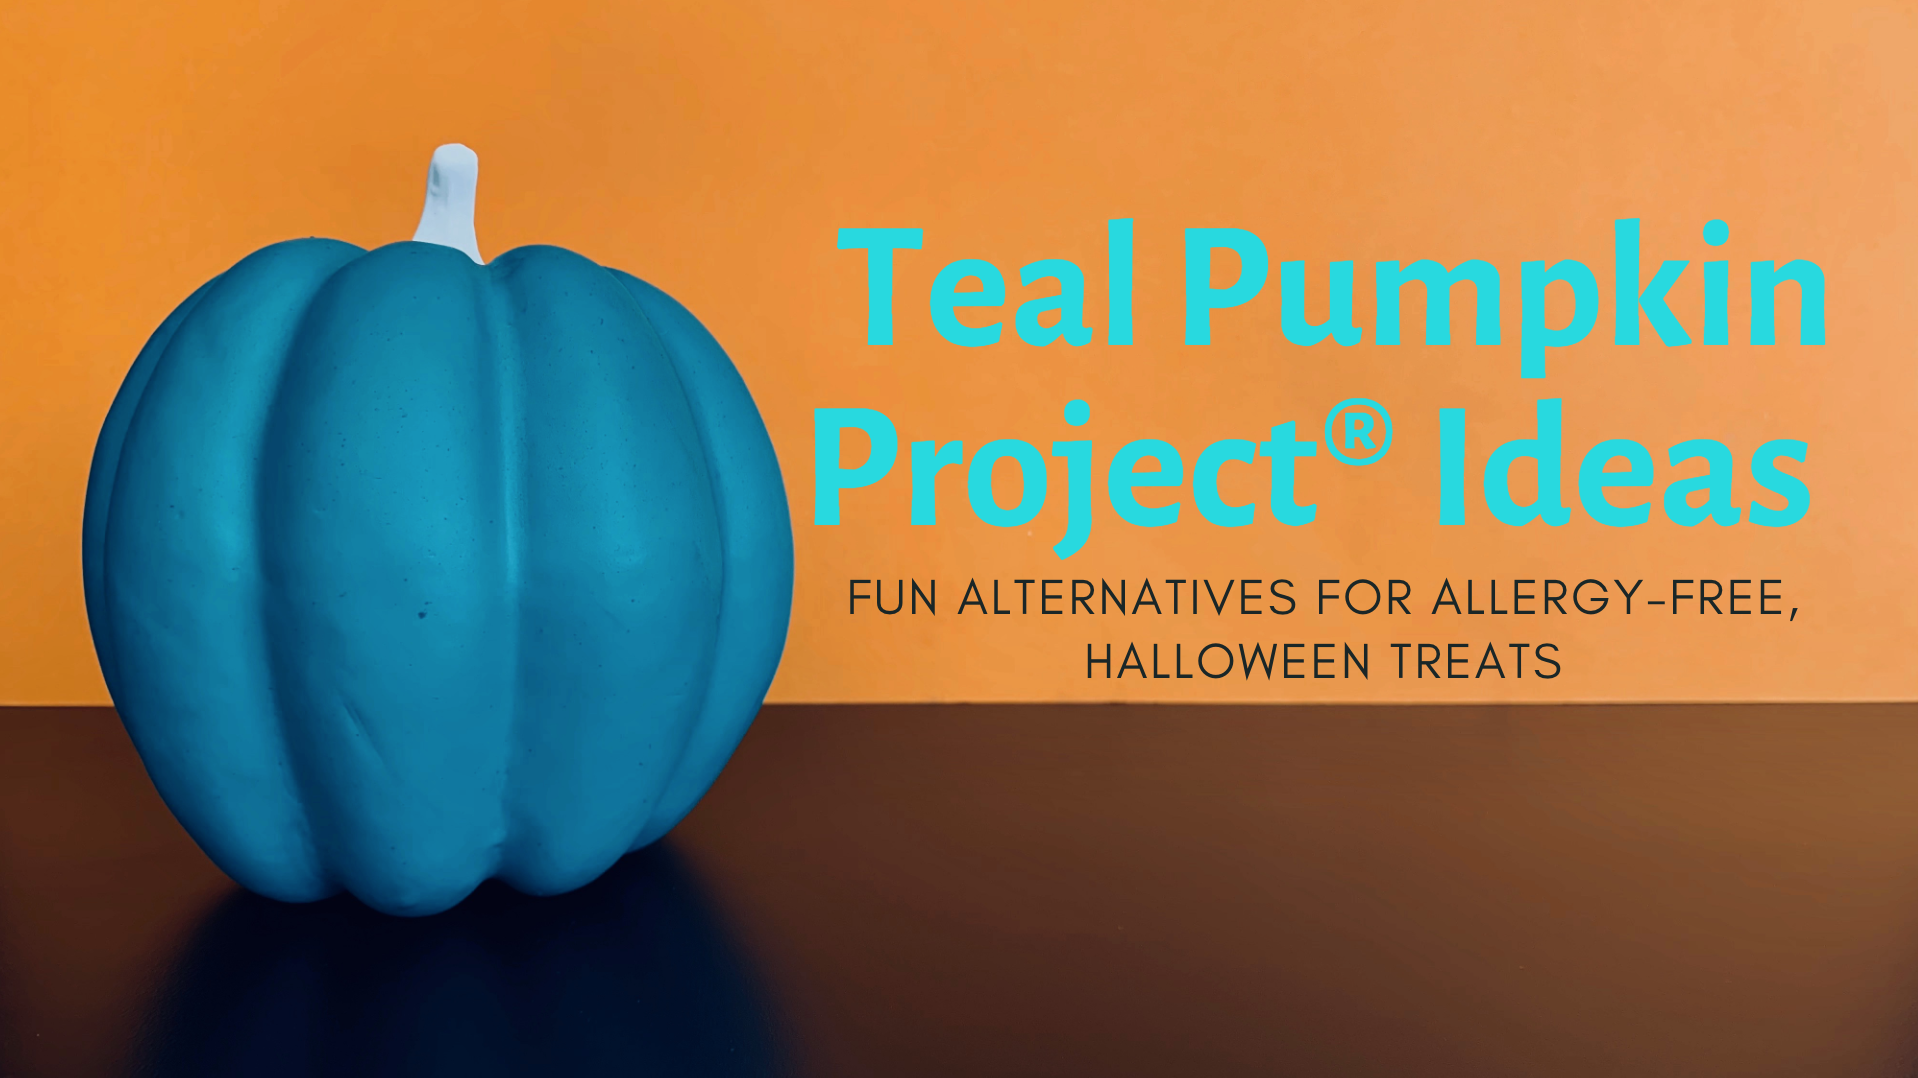 Teal Pumpkin Project ® Ideas: Allergy-Free Halloween Treats